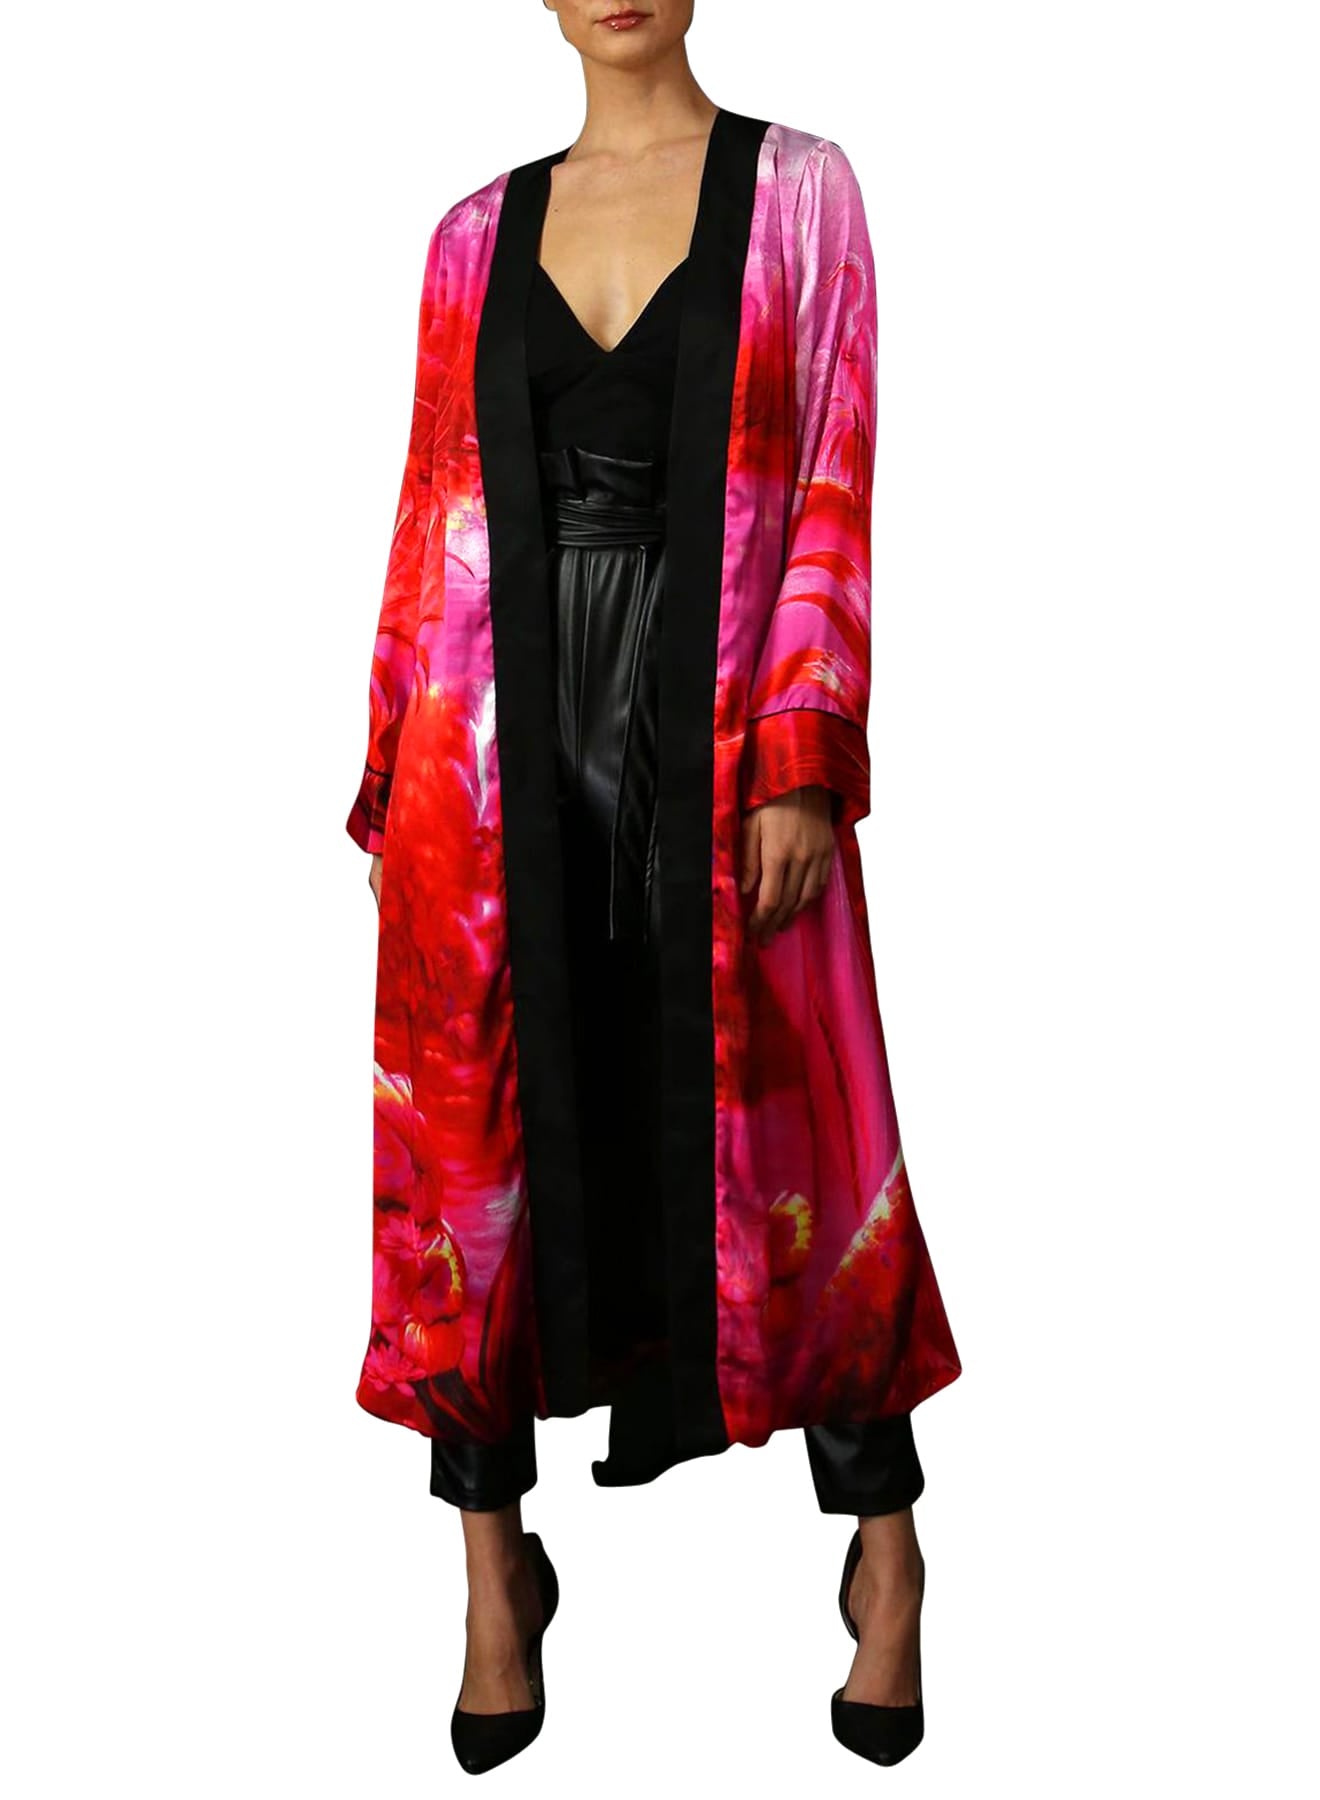 "Kyle X Shahida" "silk kimono robe" "belted kimono" "plus size long kimono" "hot pink robe silk"